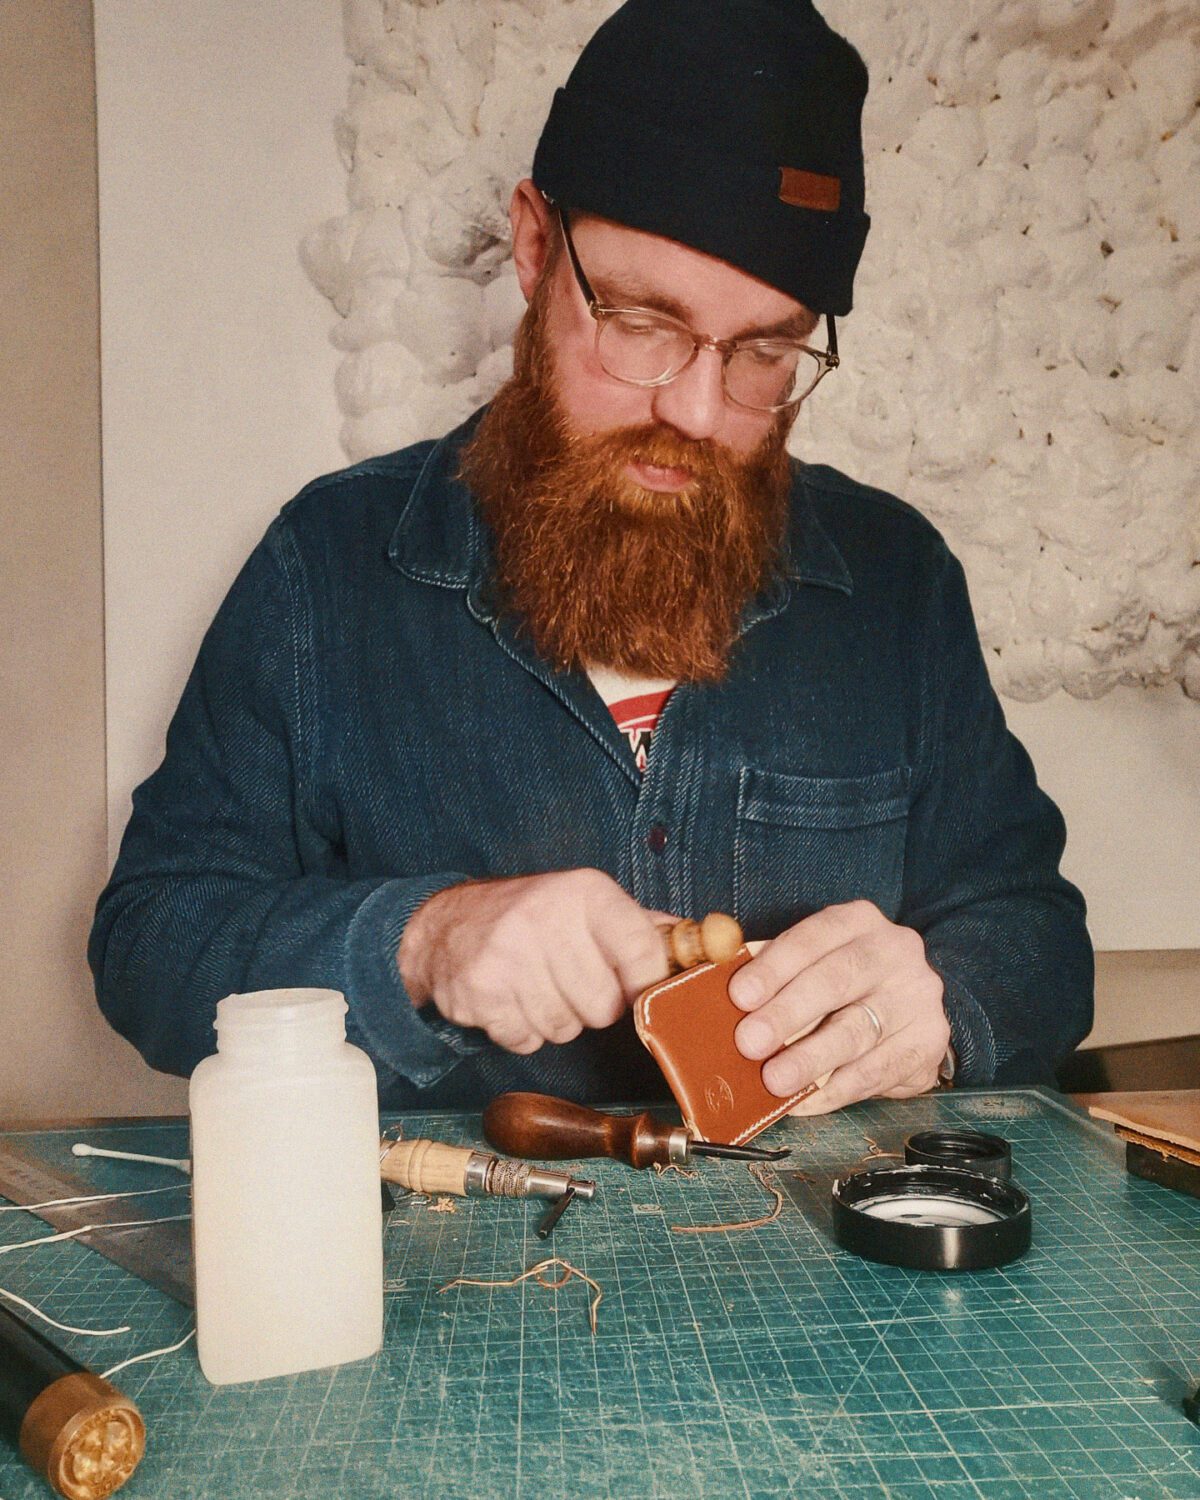 Jonas Malmström doing leathercrafting.